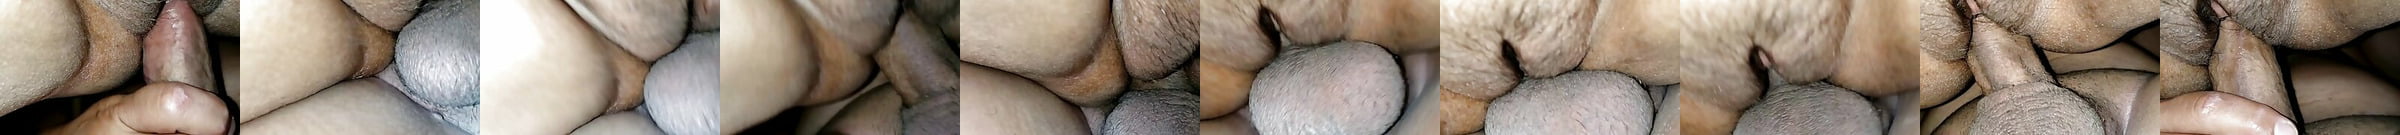 Stranger Sliding His Big Cock In My Wife Porn 87 Xhamster Xhamster 